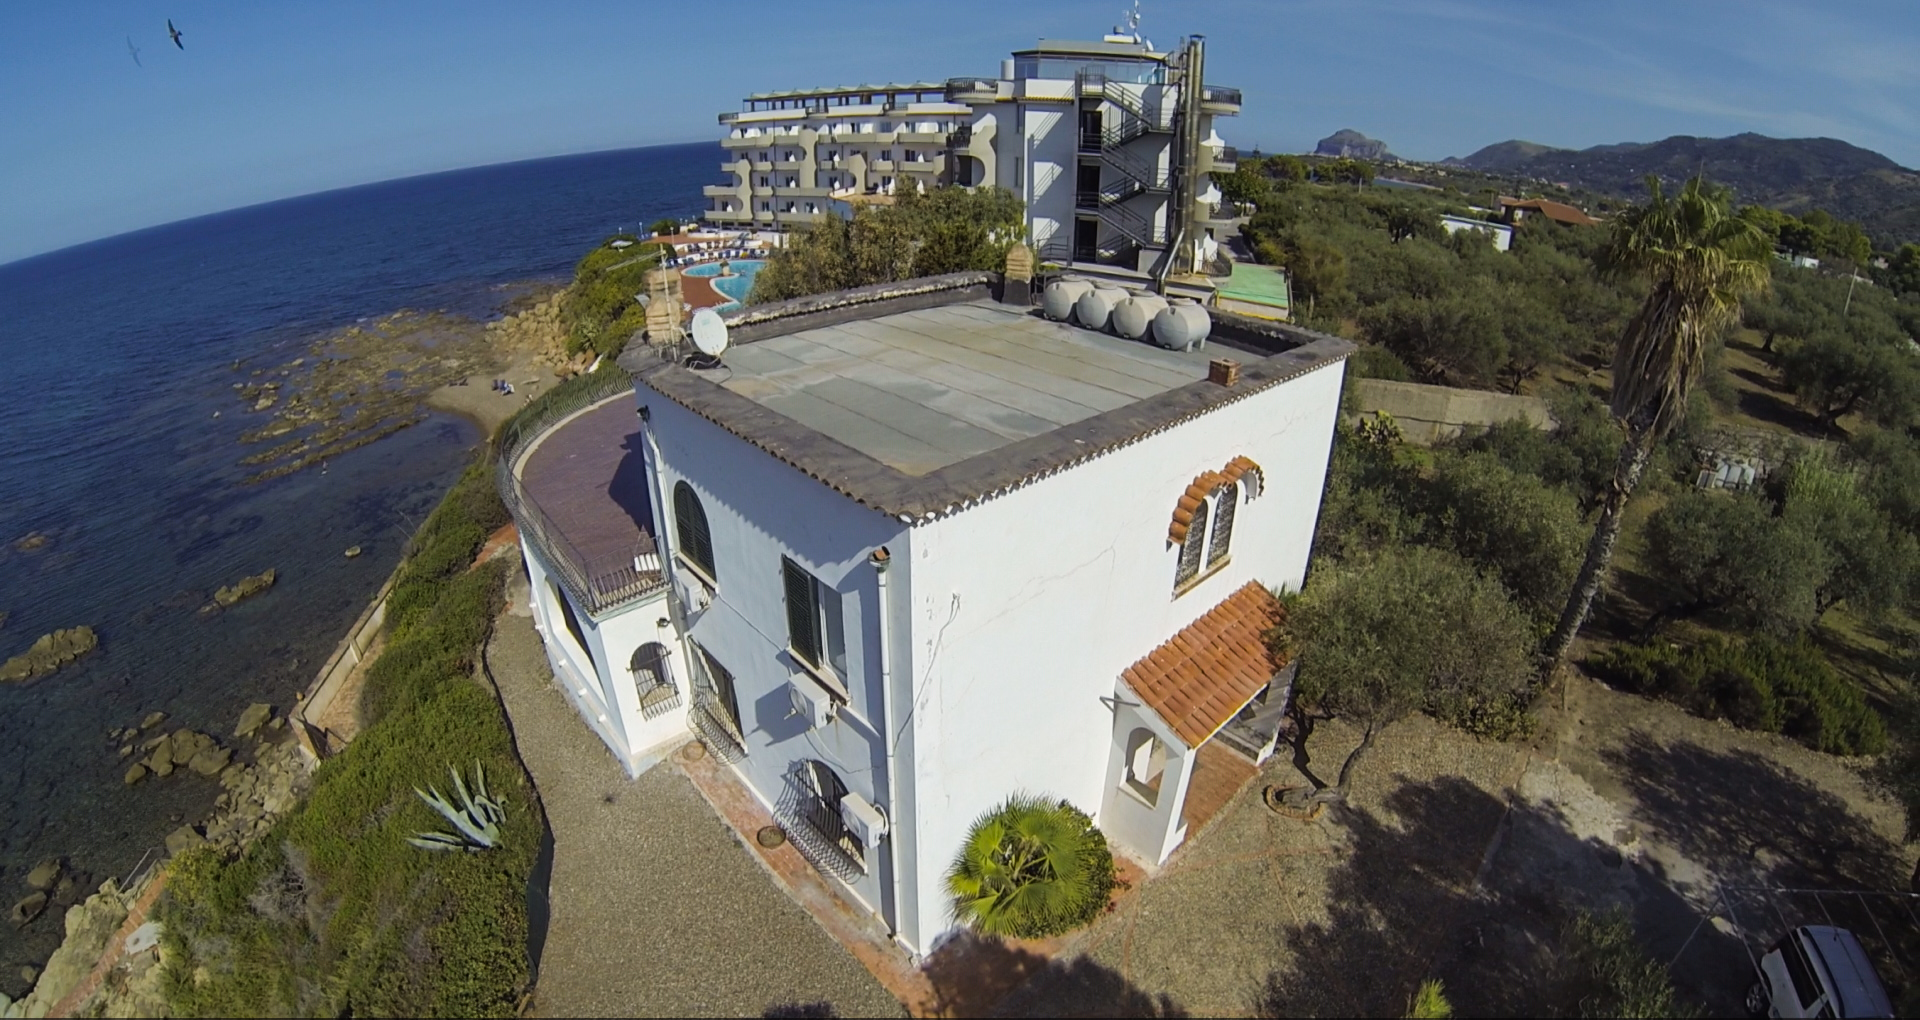 Villa in Sicily on the beach side